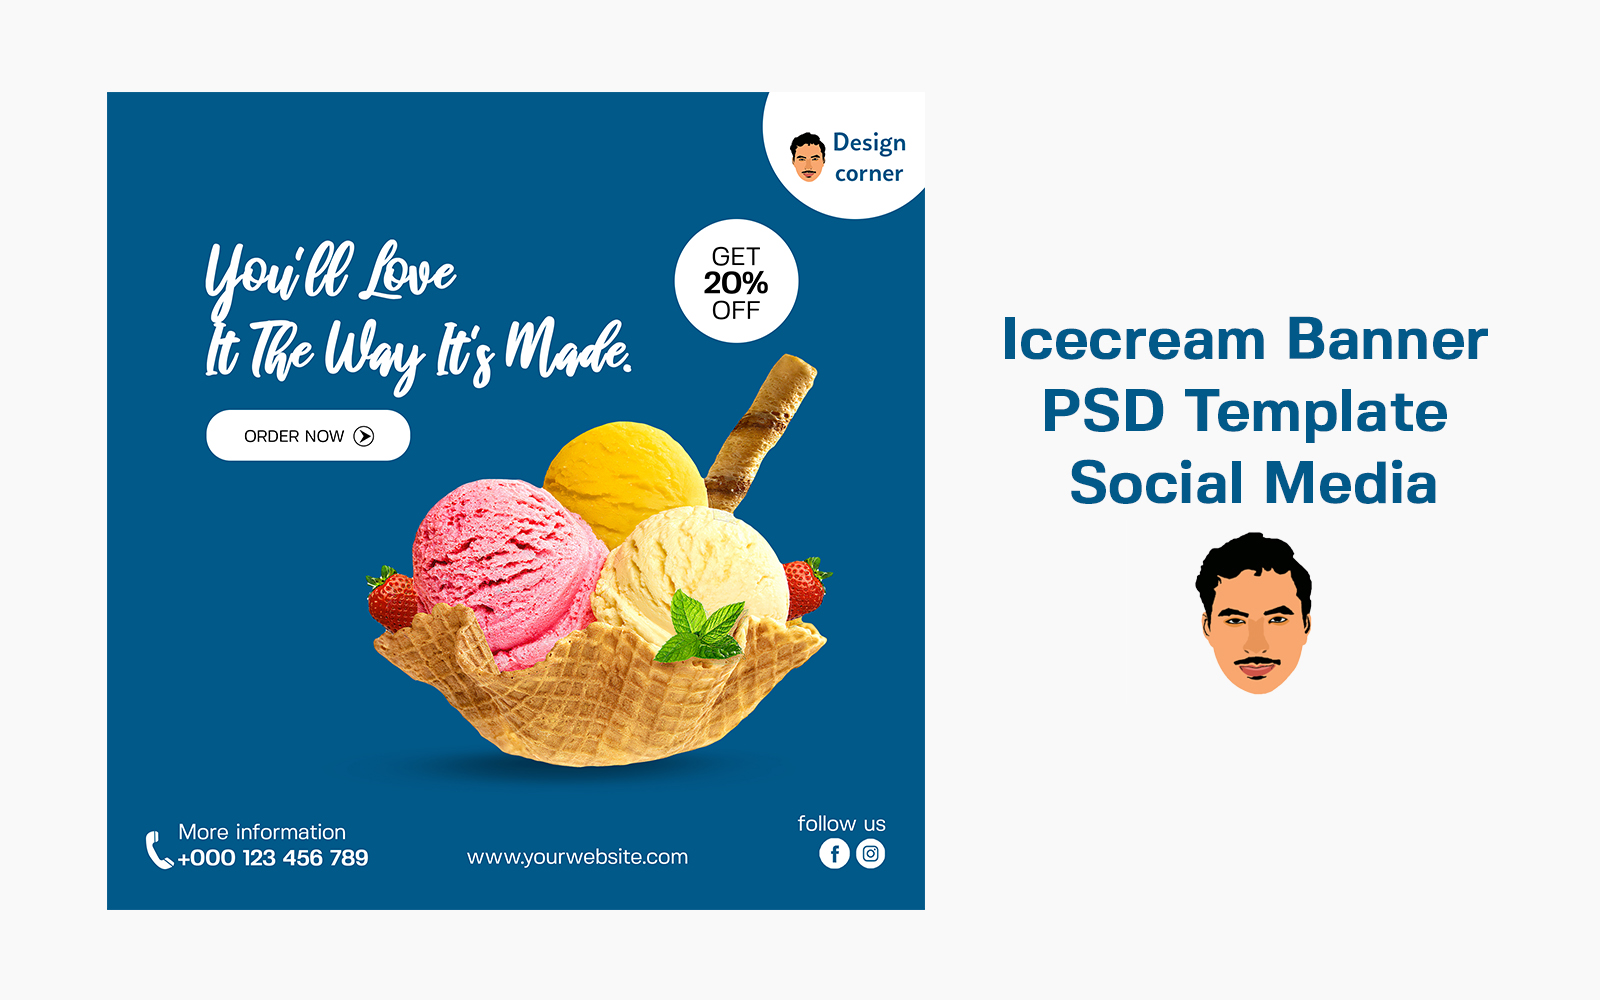 Icecream Post PSD Template Social Media